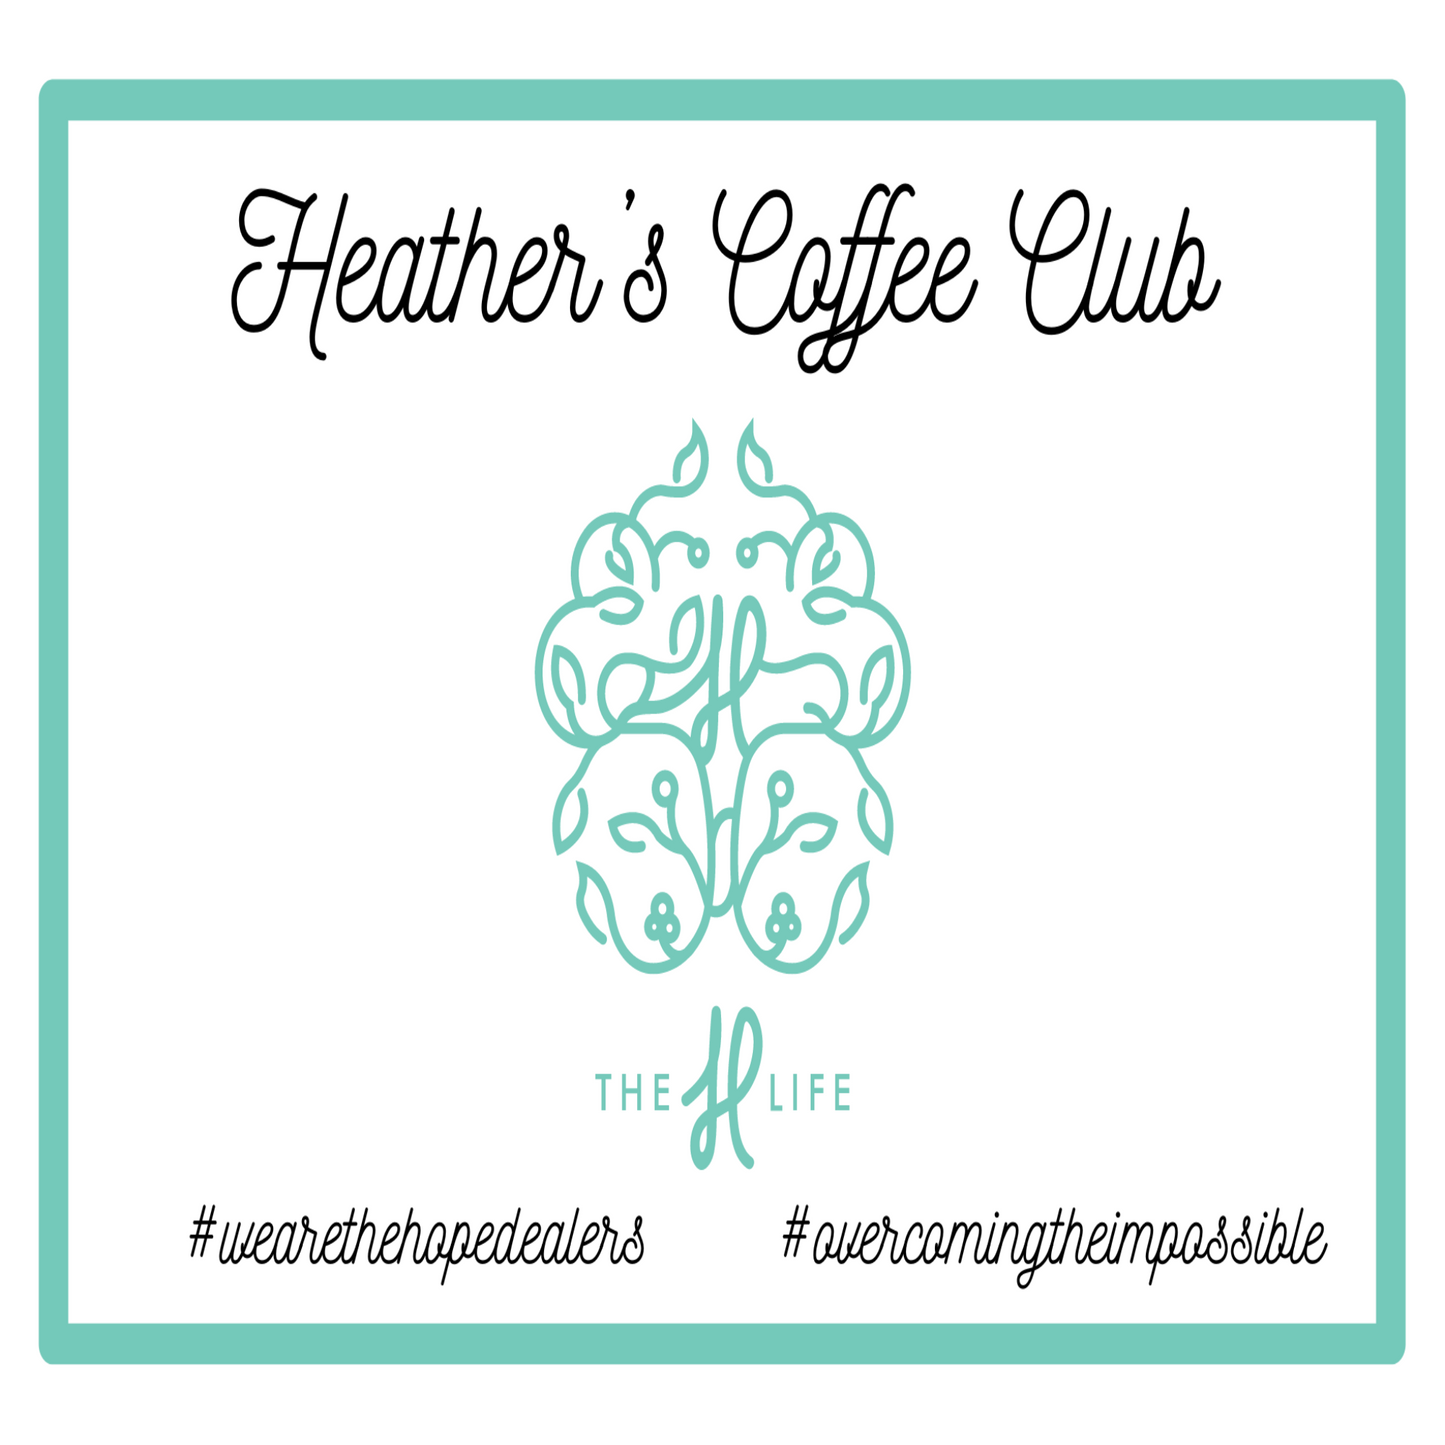 Heather's Coffee Club